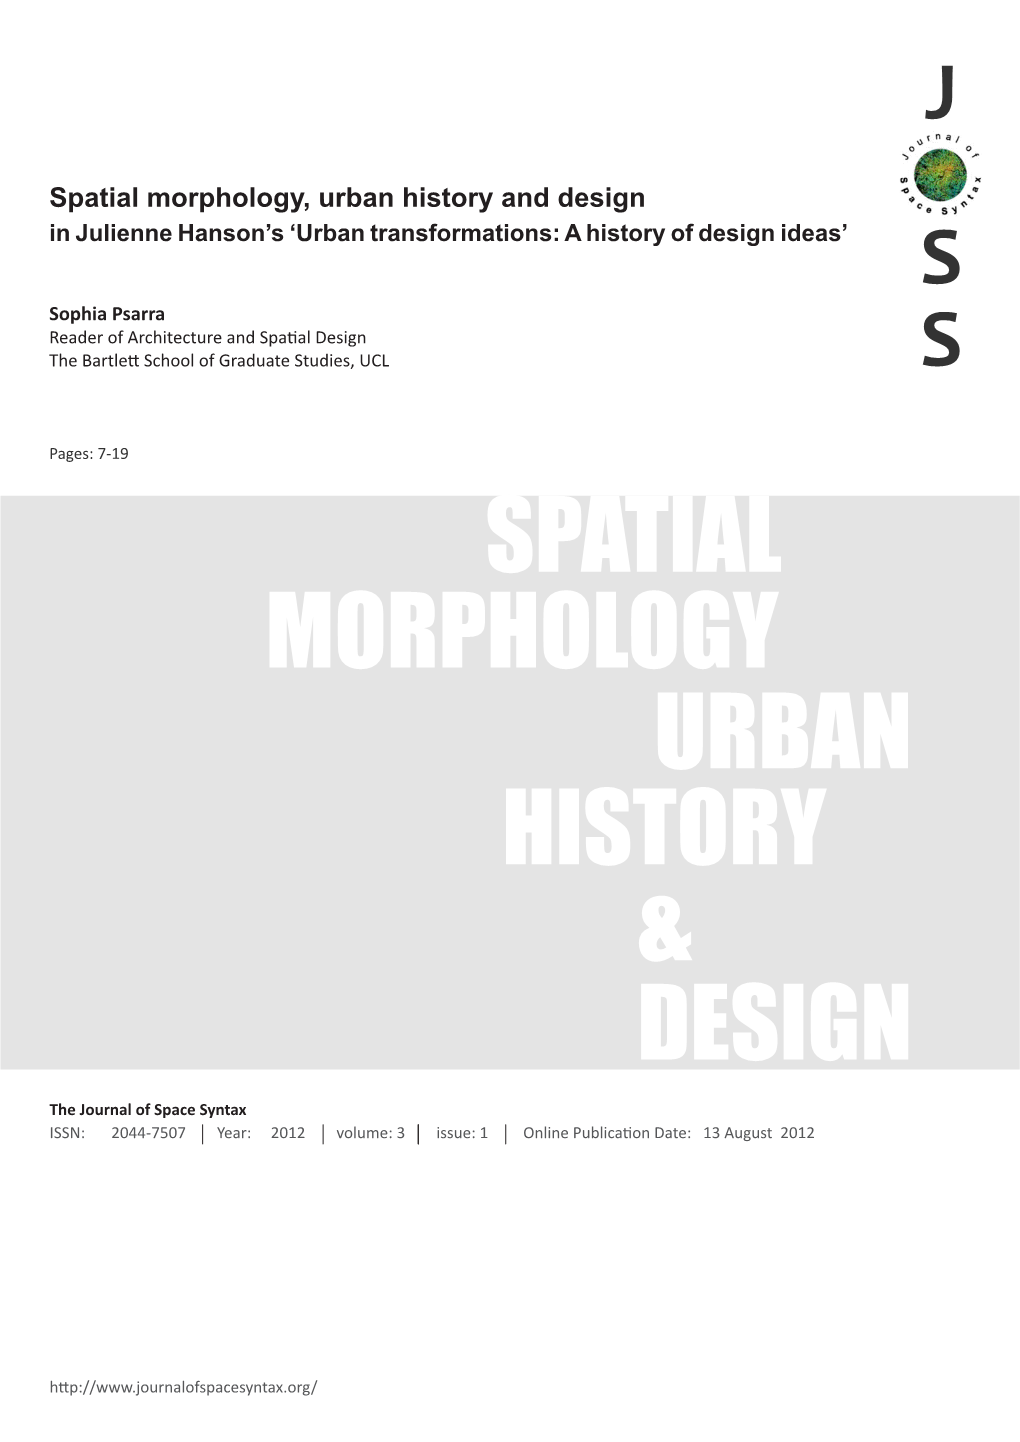 Spatial Morphology Urban History & Design